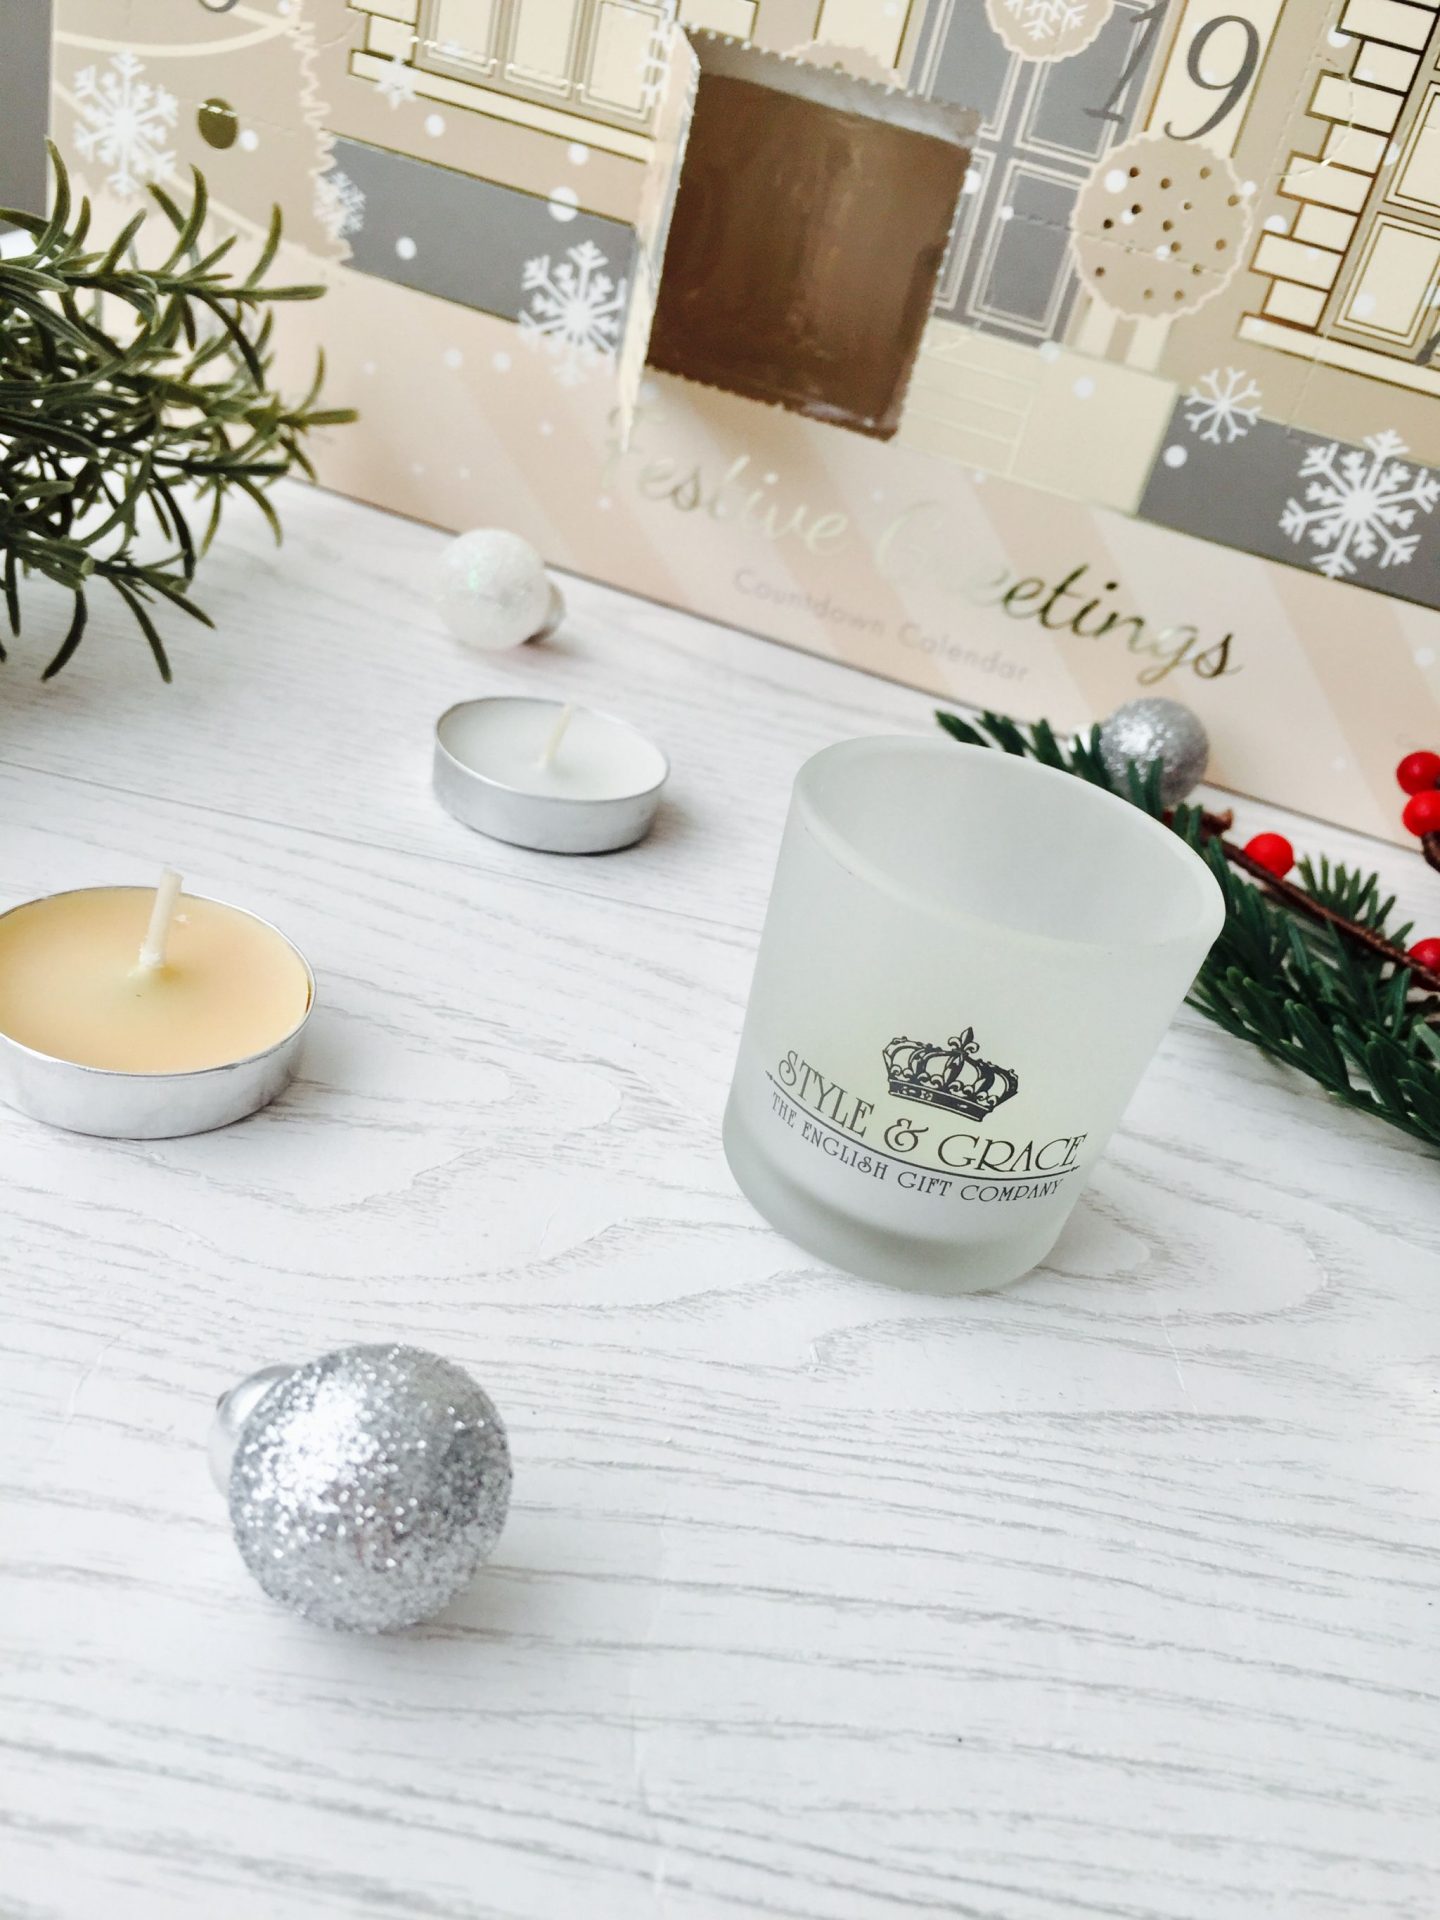 Perfume Click Advent calendar gift ideas Christmas discount